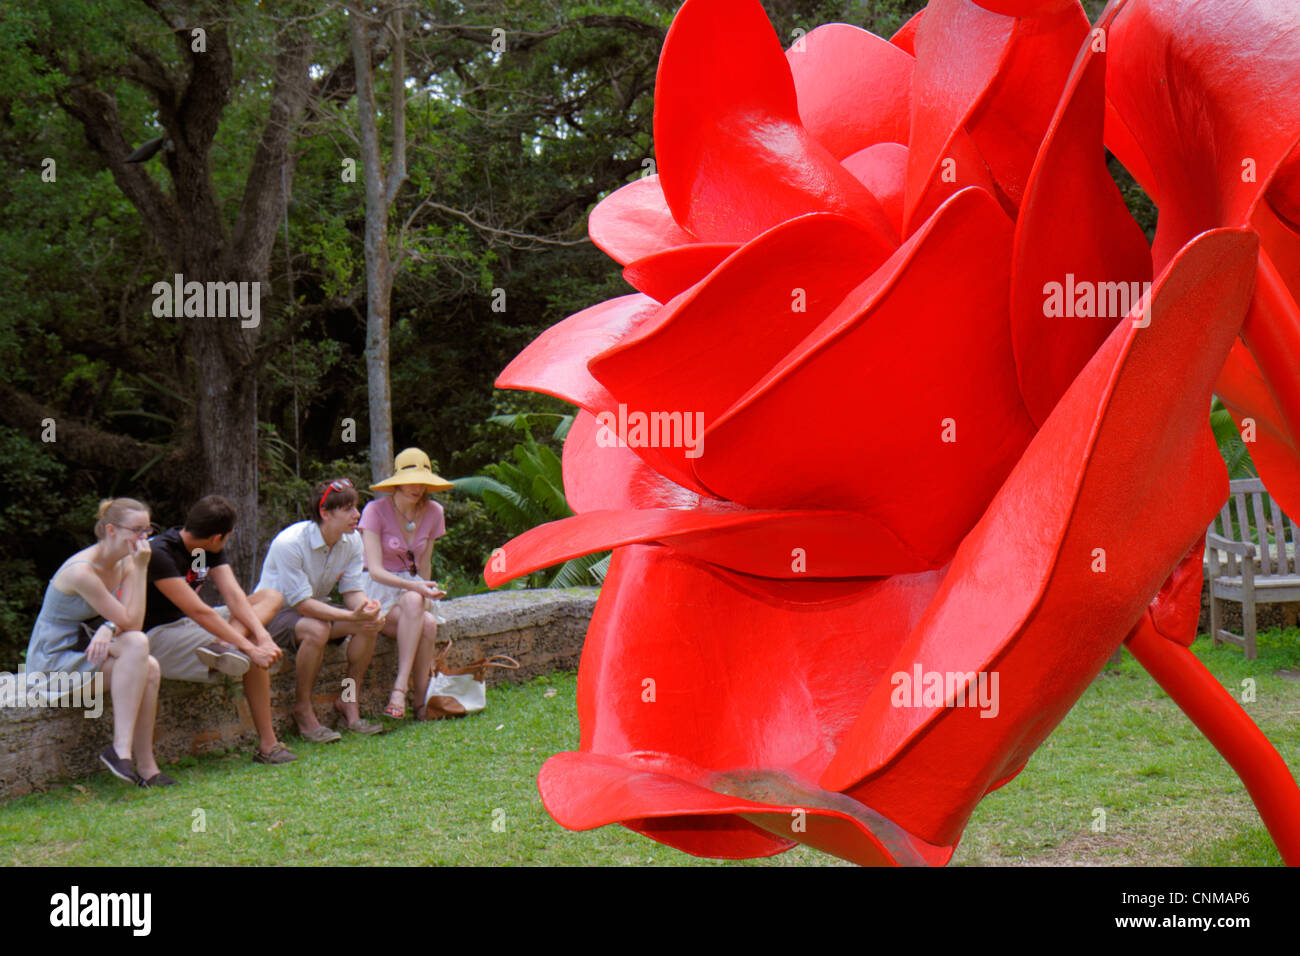 Miami Florida,Coral Gables,Fairchild Tropical Gardens,giant red rose,art artwork installation,artist Will Ryman,adult adults man men male,woman women Stock Photo